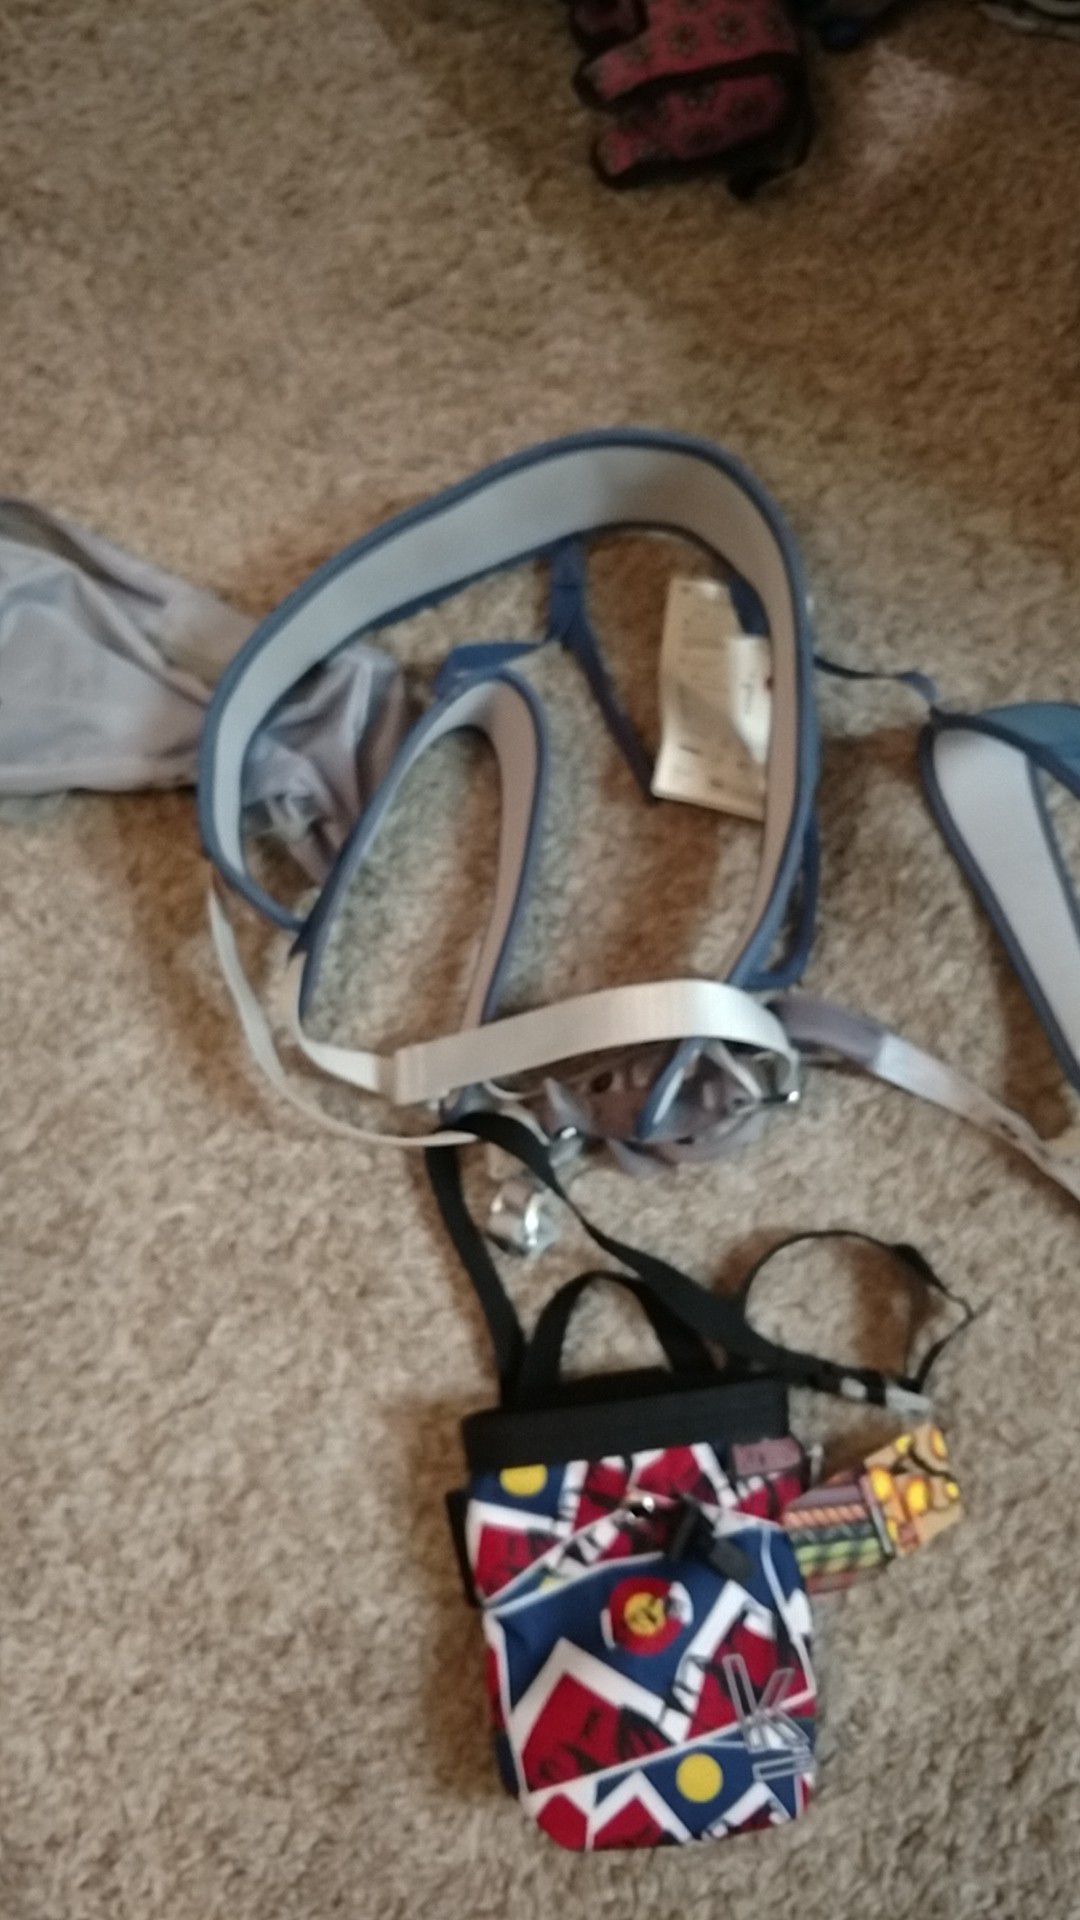 Petzl Corvax Size 1 Climbing Harness and chaulk bag